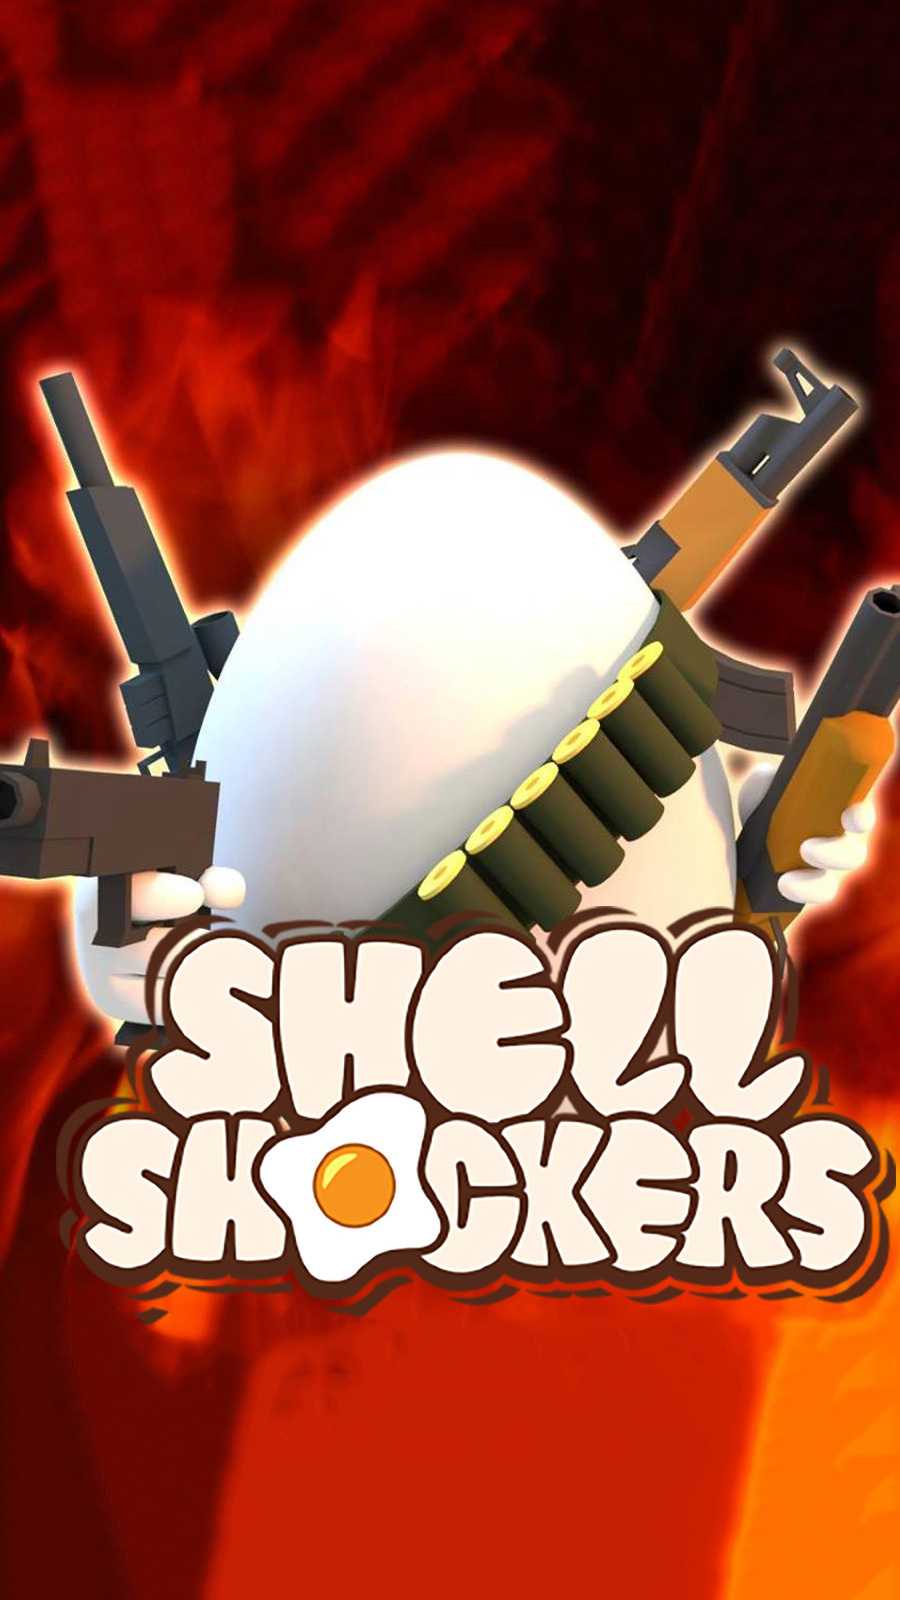 Shell Shockers Wallpaper - iXpap